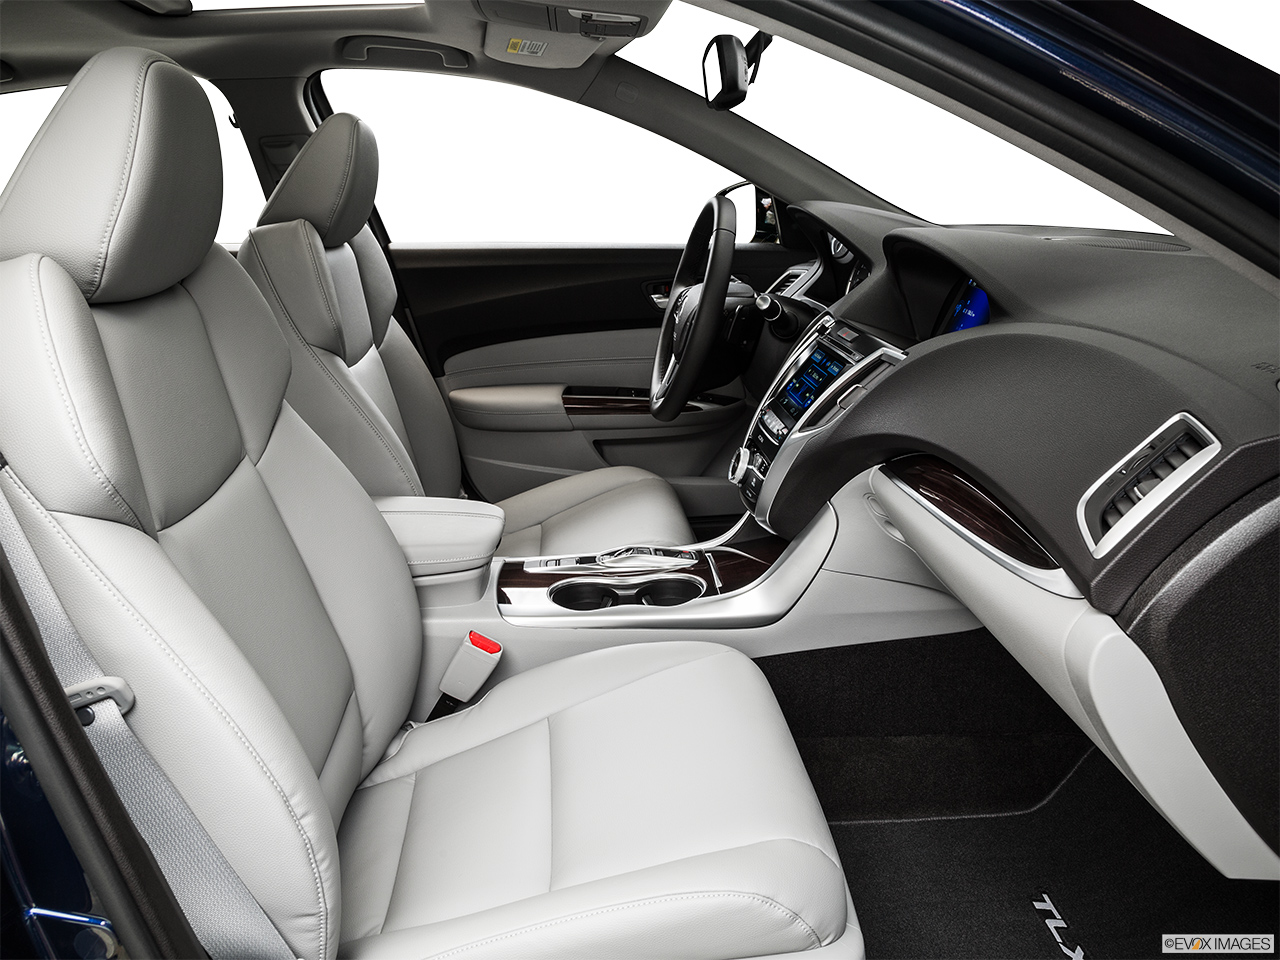 2016 Acura TLX 3.5 V-6 9-AT P-AWS Passenger seat. 